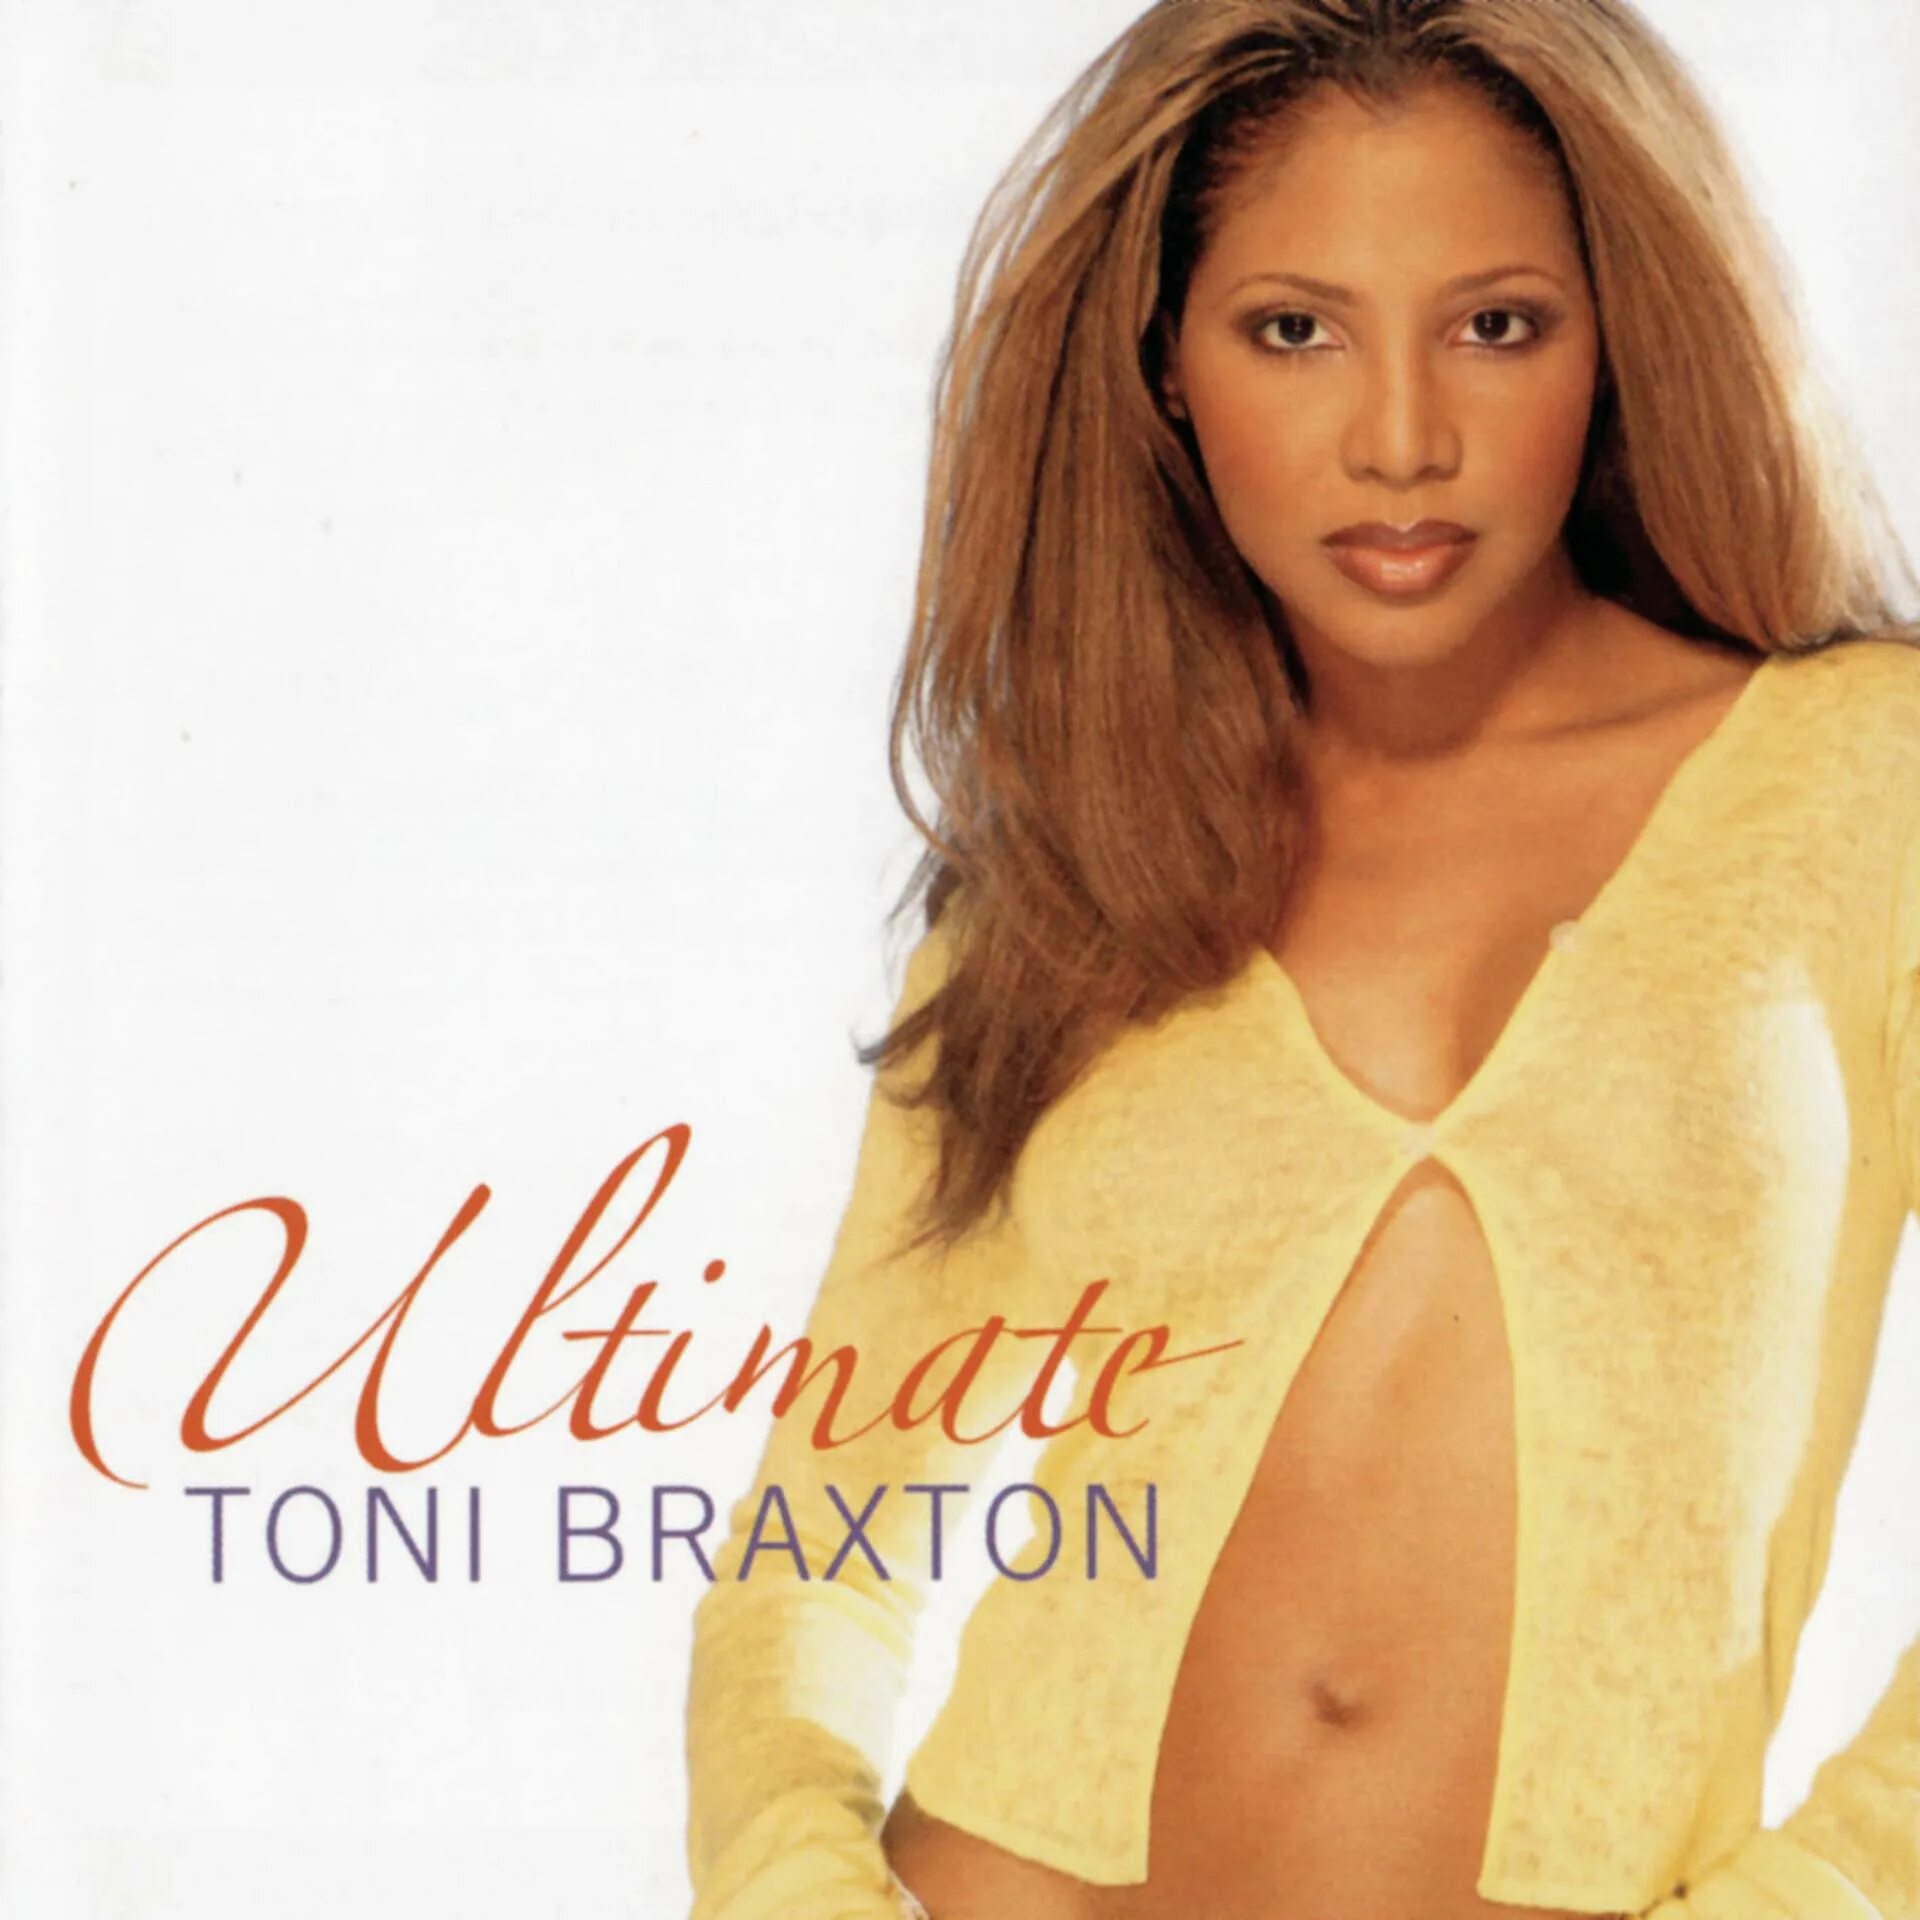 Break my heart toni braxton. Toni Braxton обложка. Обложки альбомов Toni Braxton. Toni Braxton 2002. Toni Braxton - yesterday обложка альбома.